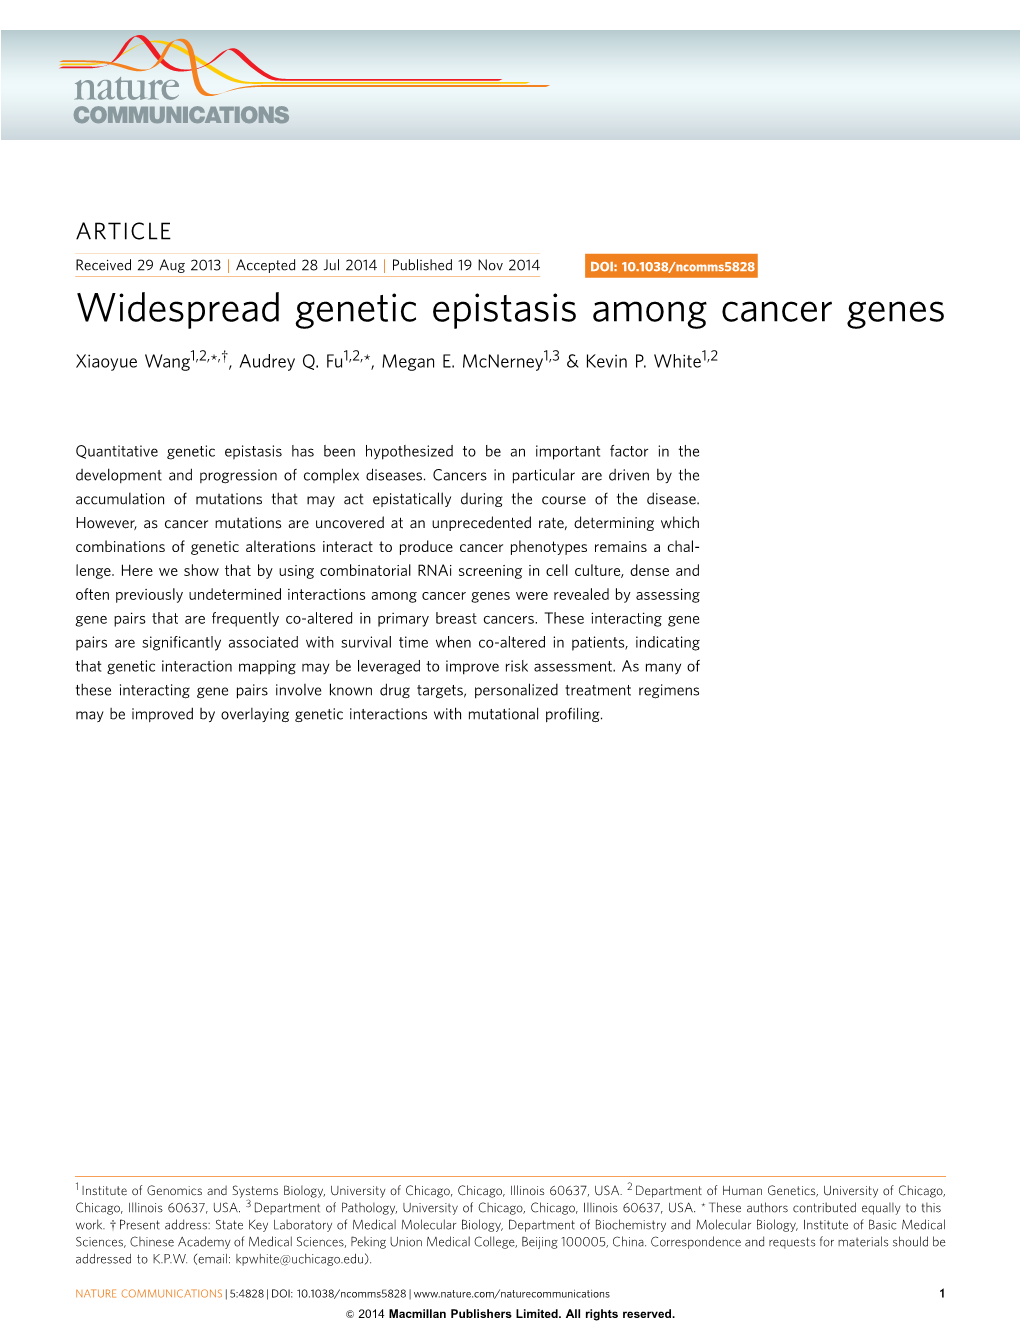 Widespread Genetic Epistasis Among Cancer Genes